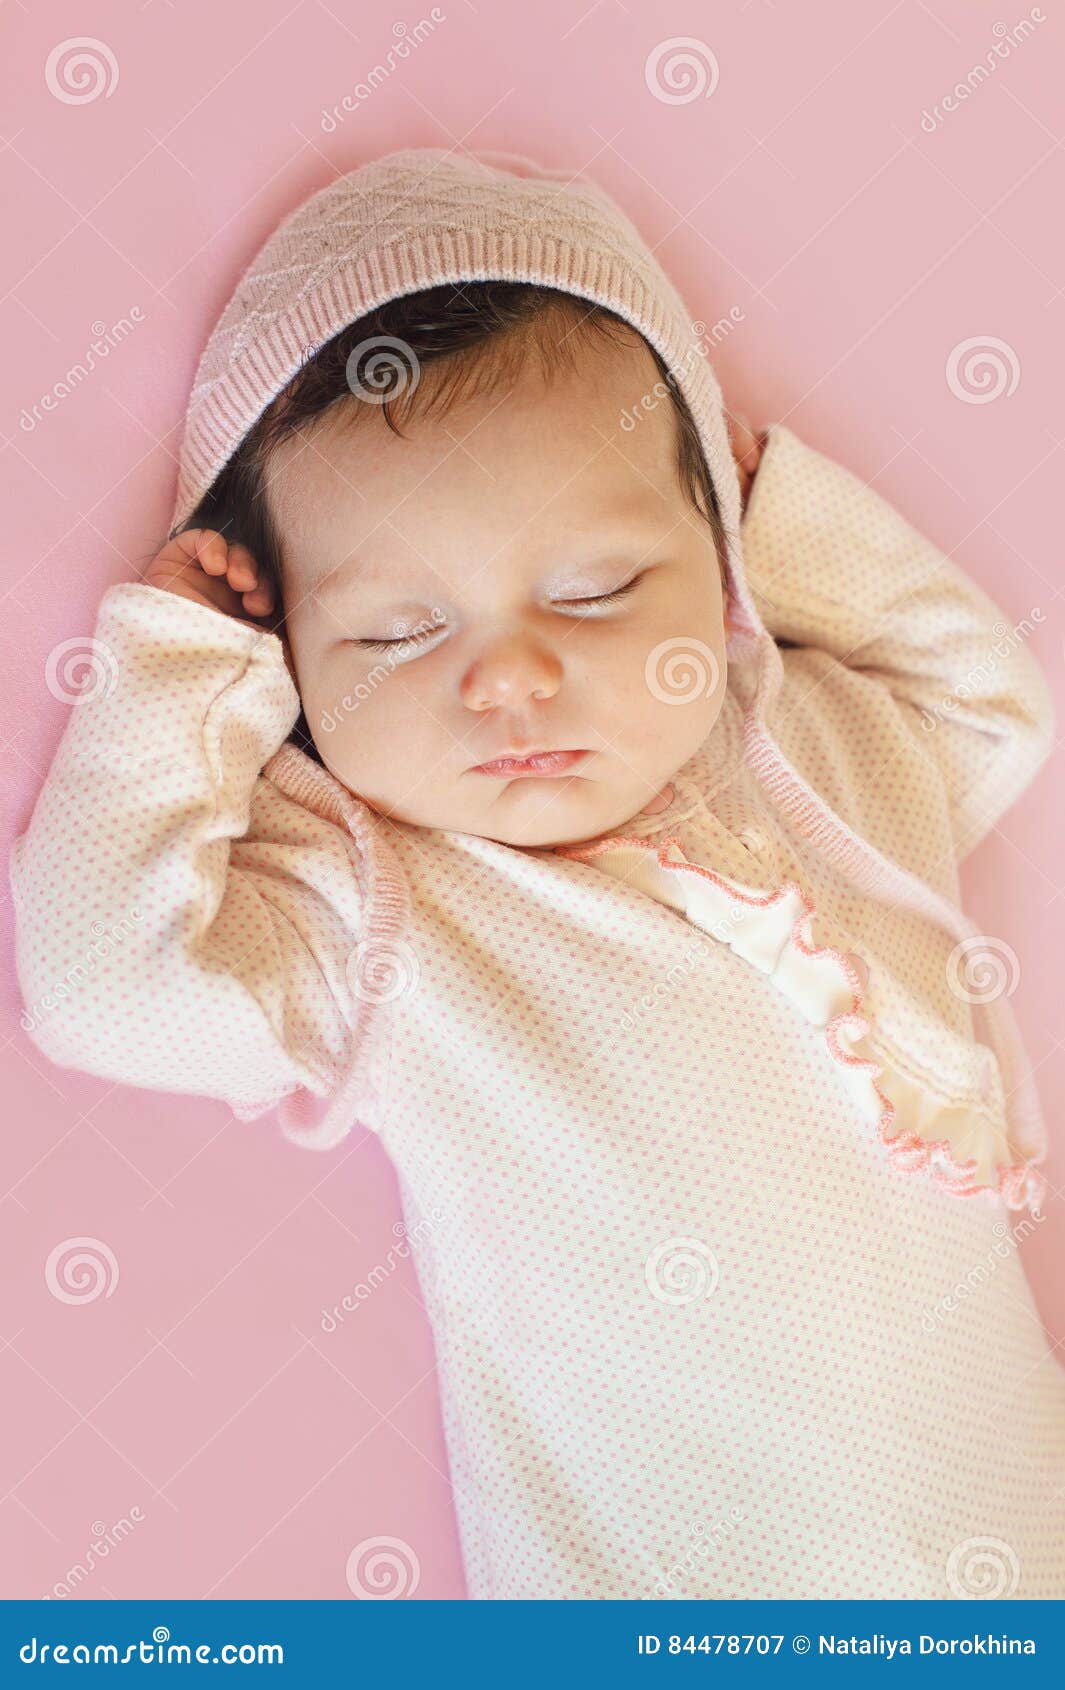 Newborn Sweet Cute Baby Girl Face Sleep Stock Image - Image of ...